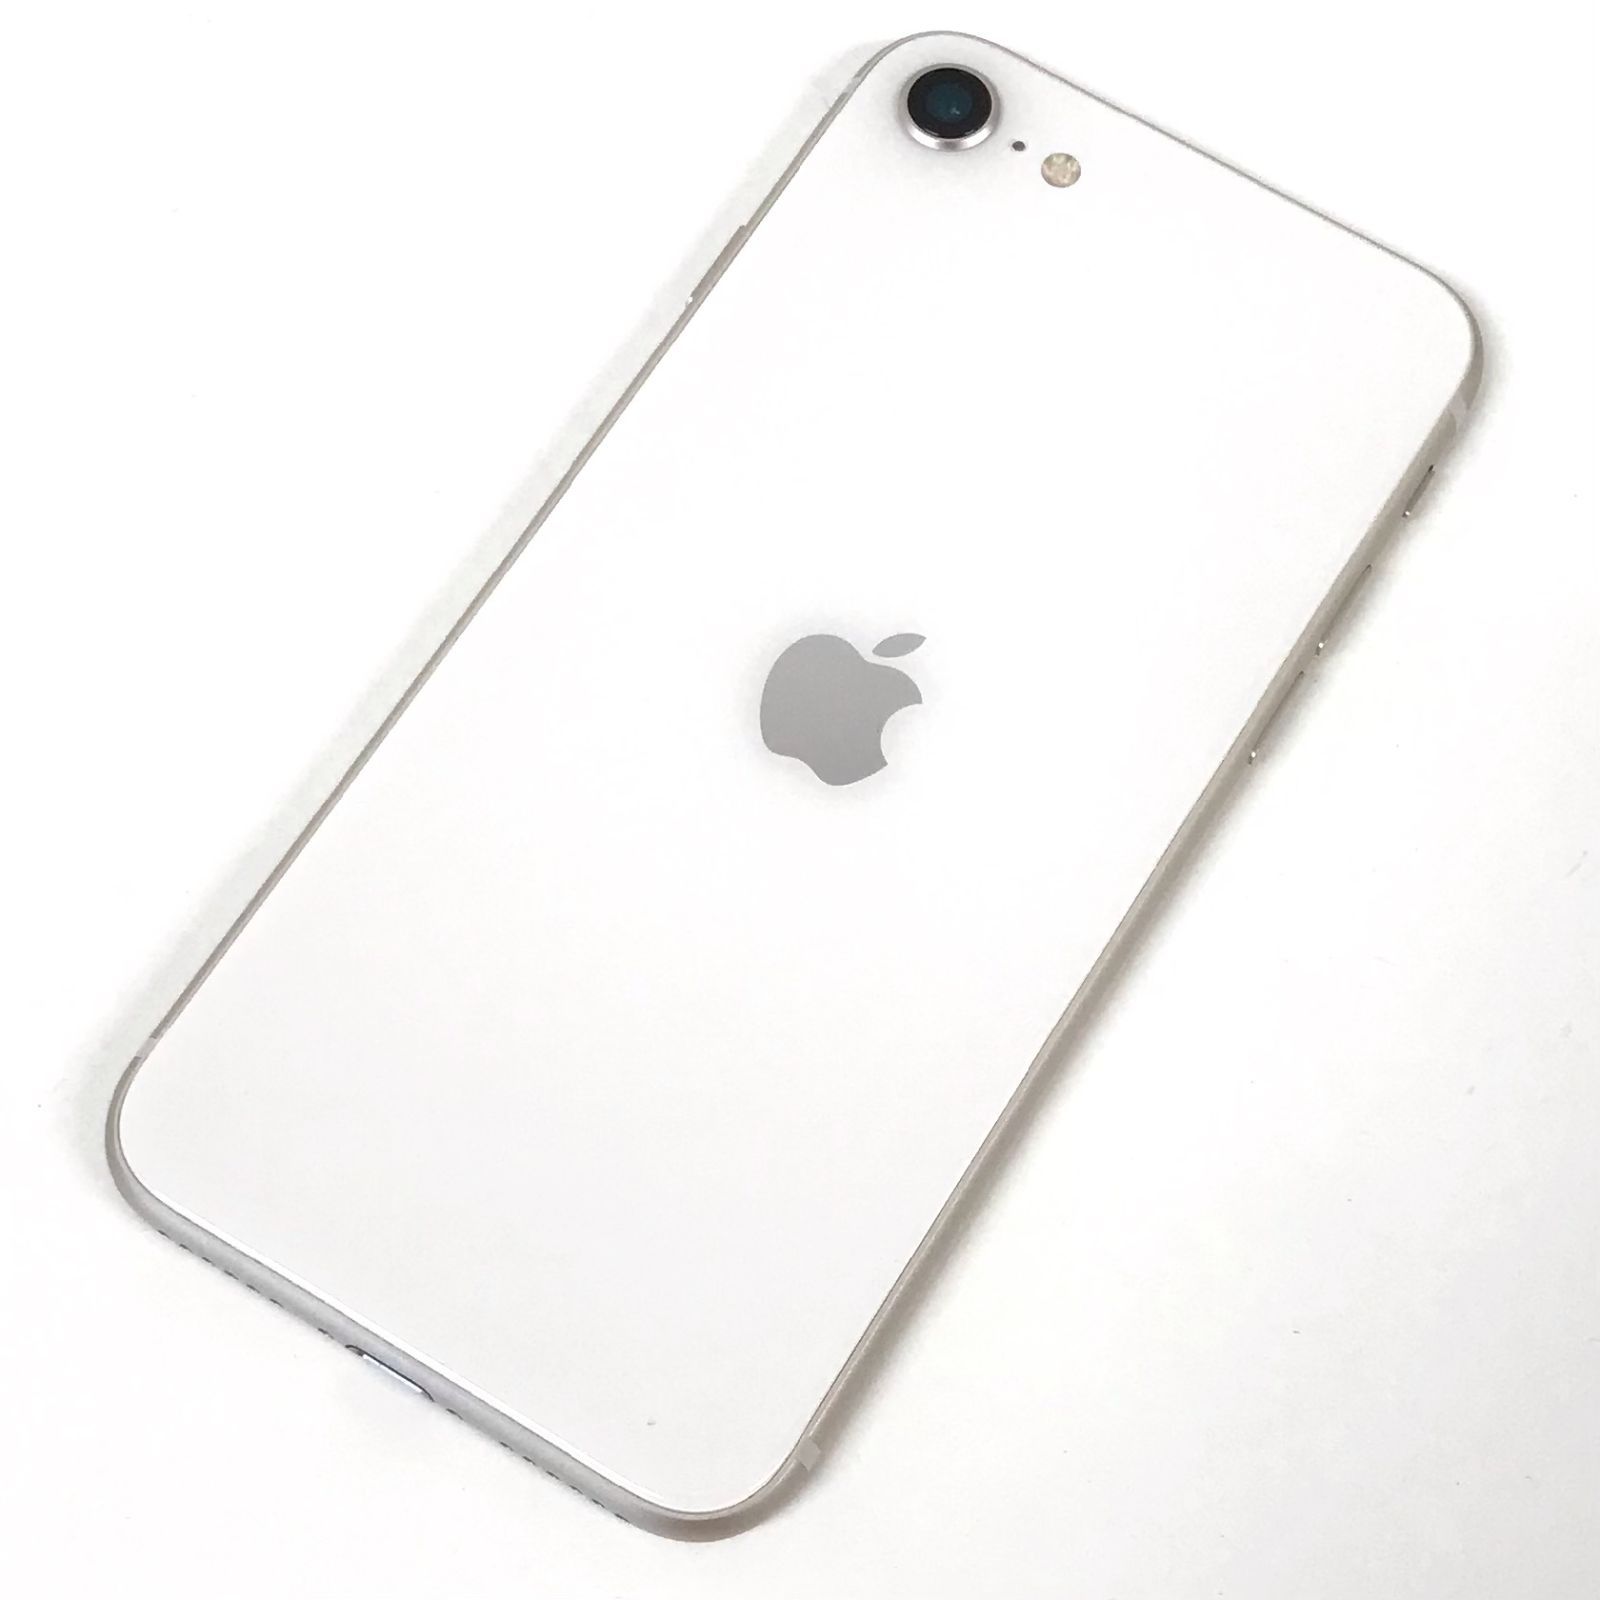 θ【新品/SIMフリー】iPhone SE（第3世代）64GB スターライト - メルカリ